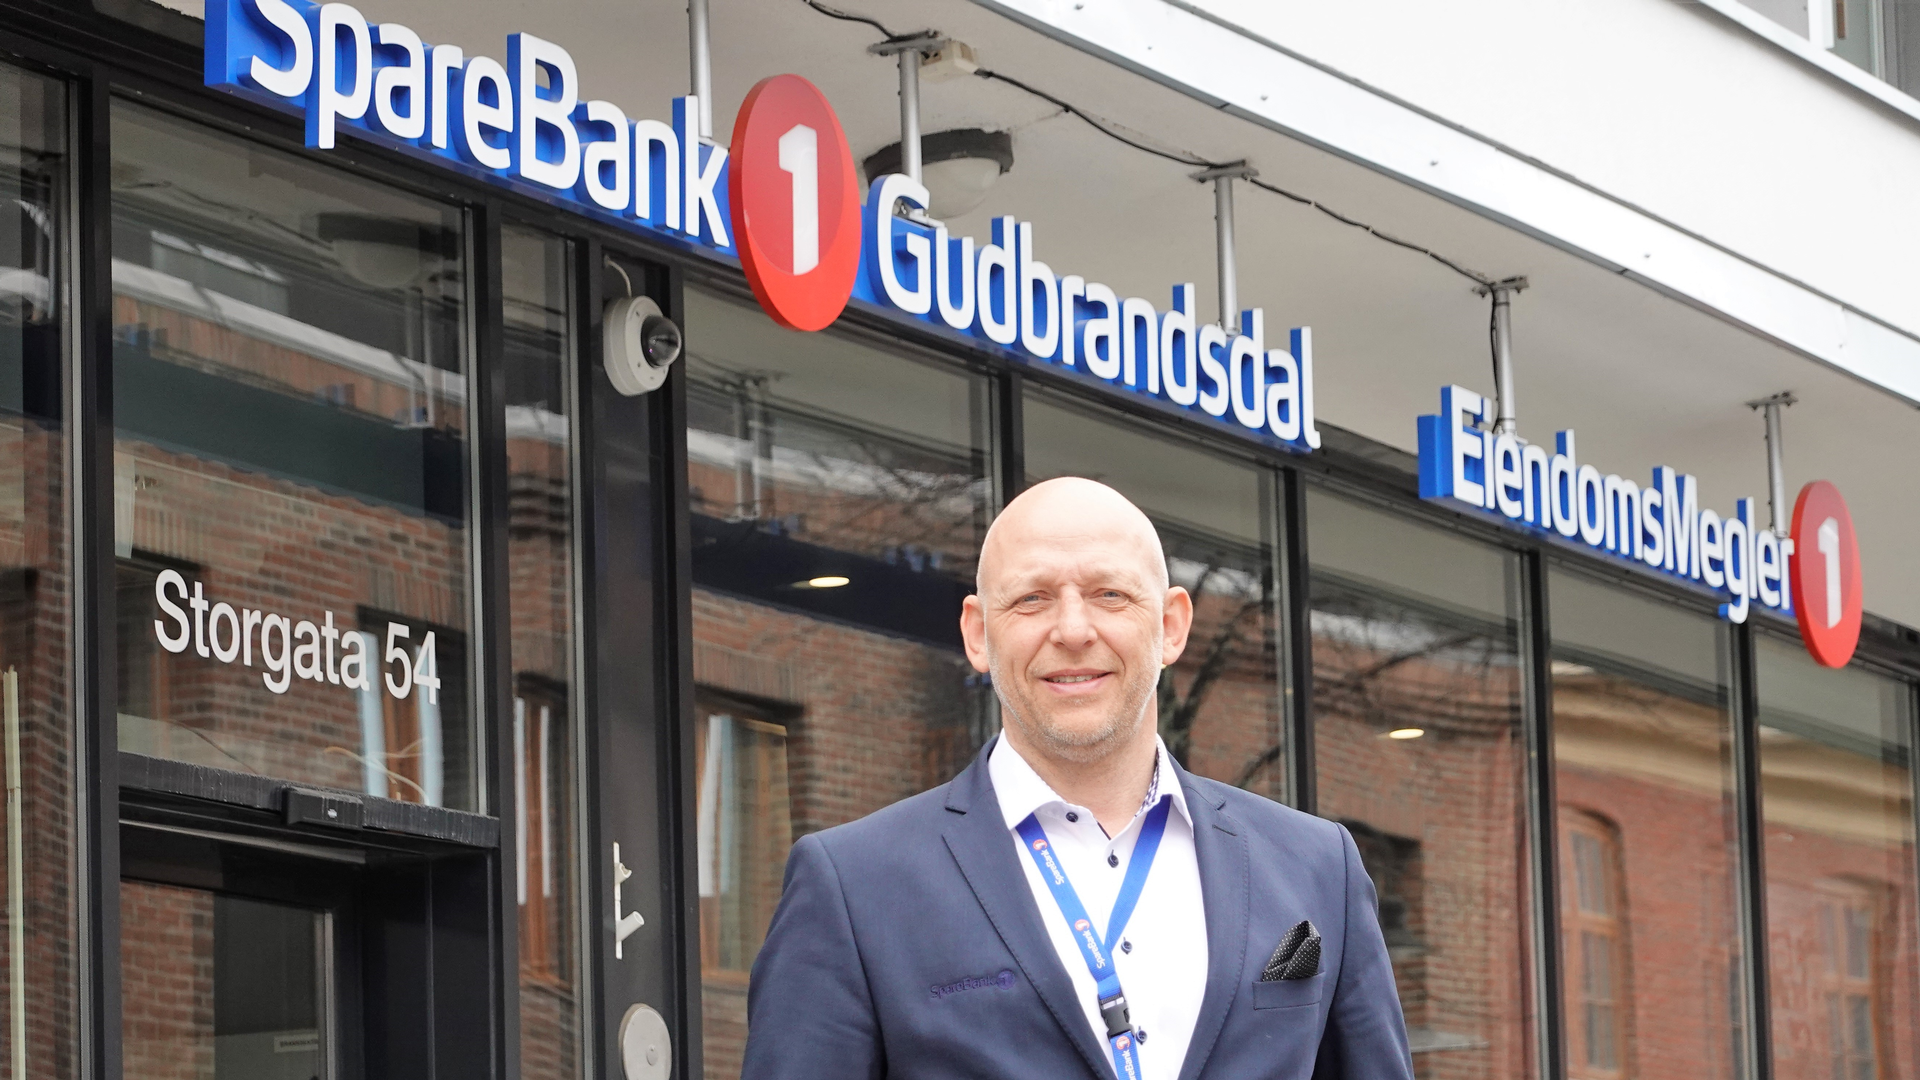 Adm bankesjef, Per Ivar Kleiven, i Sparebank1 Gudbrandsdal | Foto: SpareBank 1 Gudbrandsdal